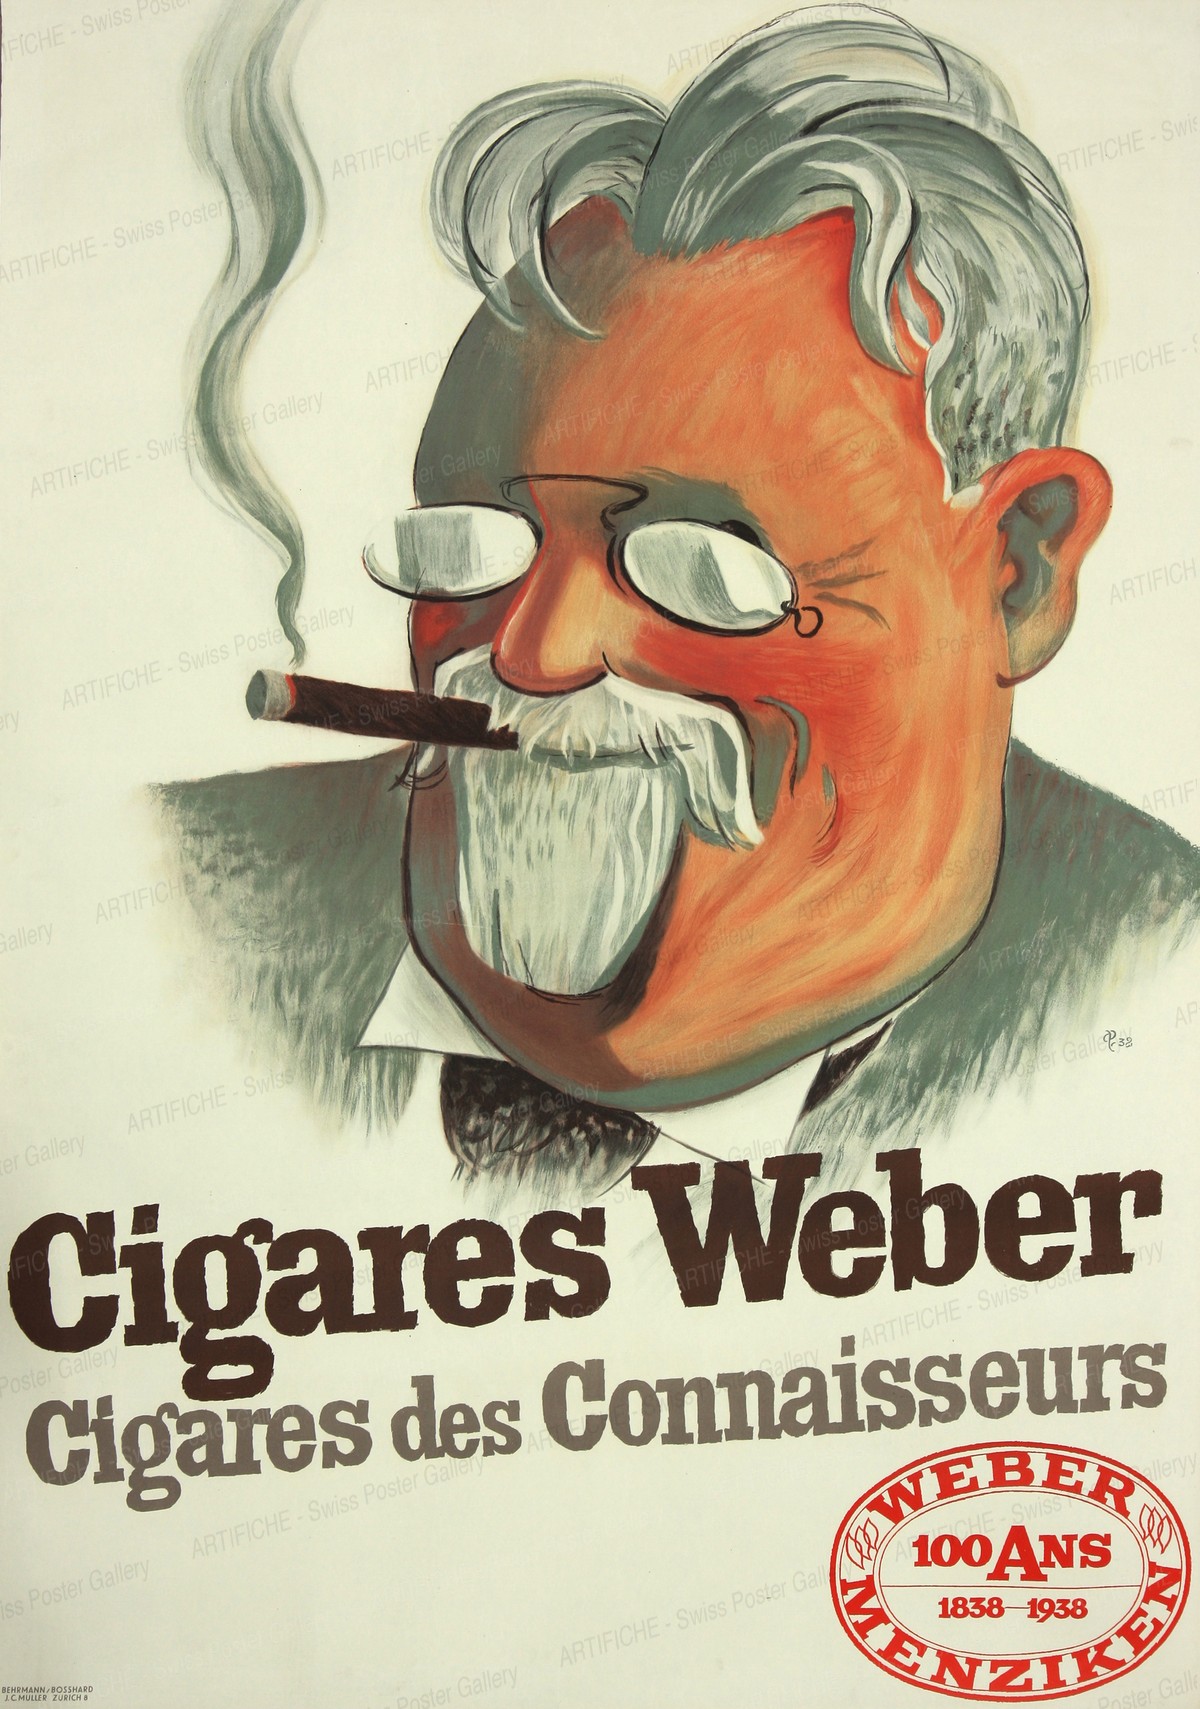 Cigares Weber – Cigares des connaisseurs, Hugo Laubi